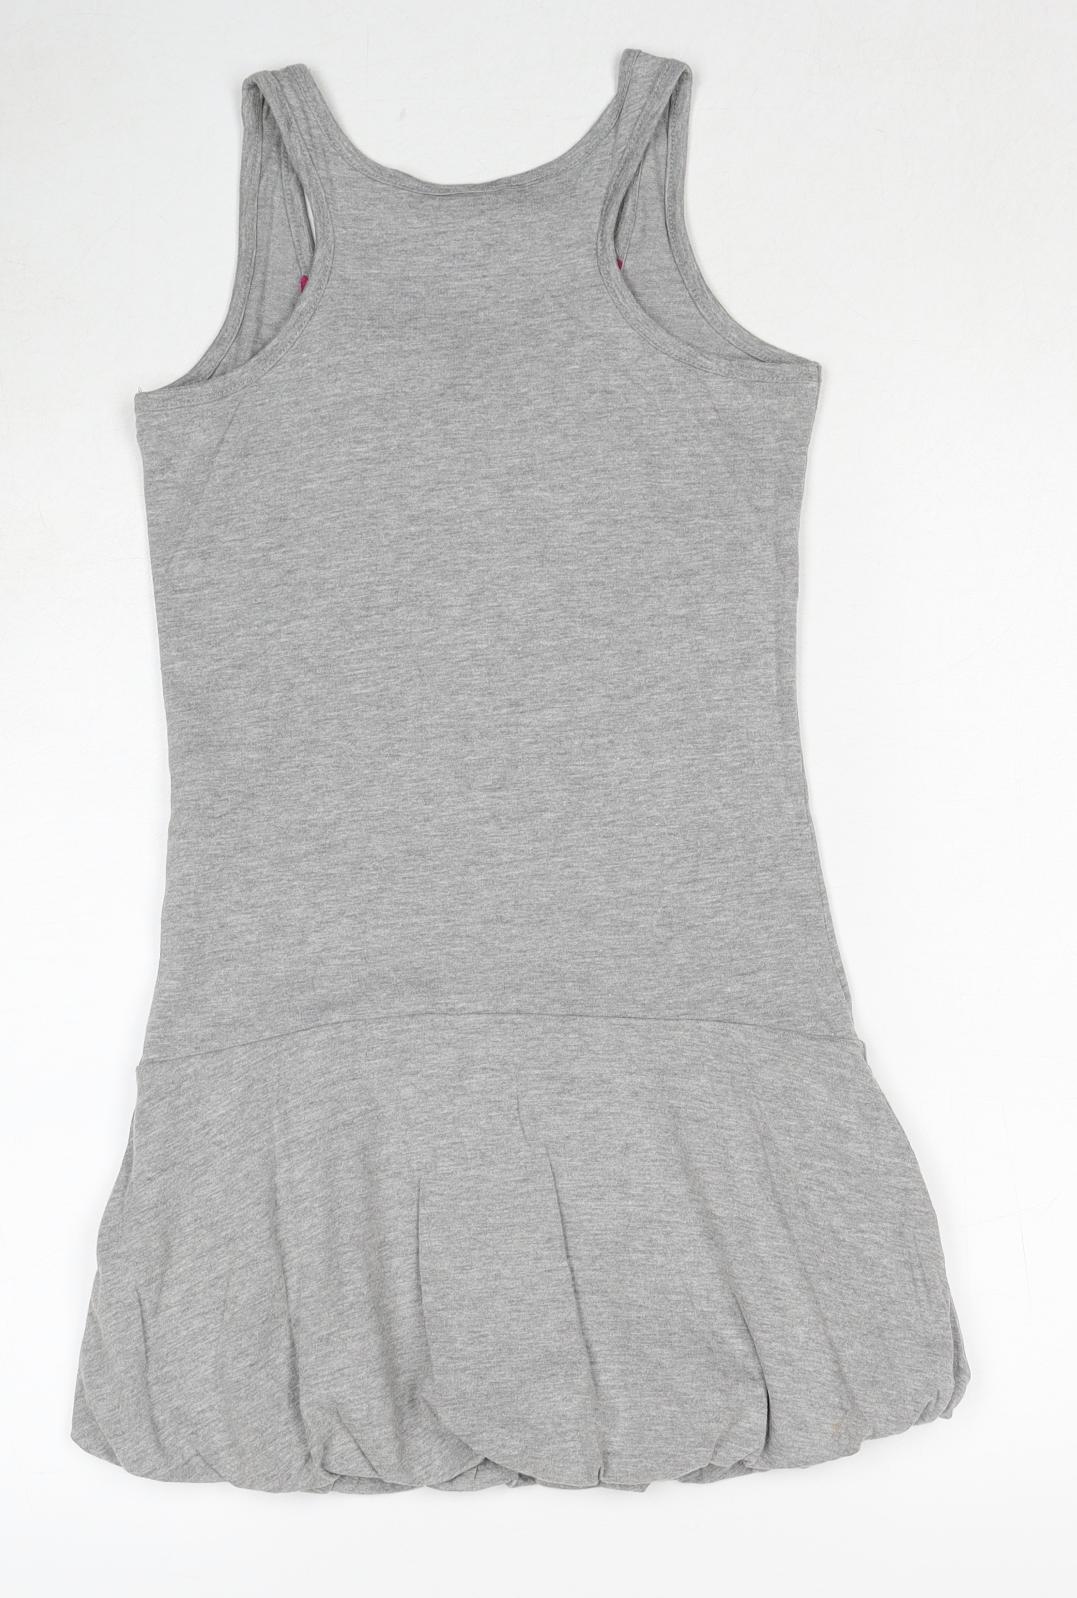 Reebok Girls Grey Cotton A-Line Size 9-10 Years Round Neck Pullover